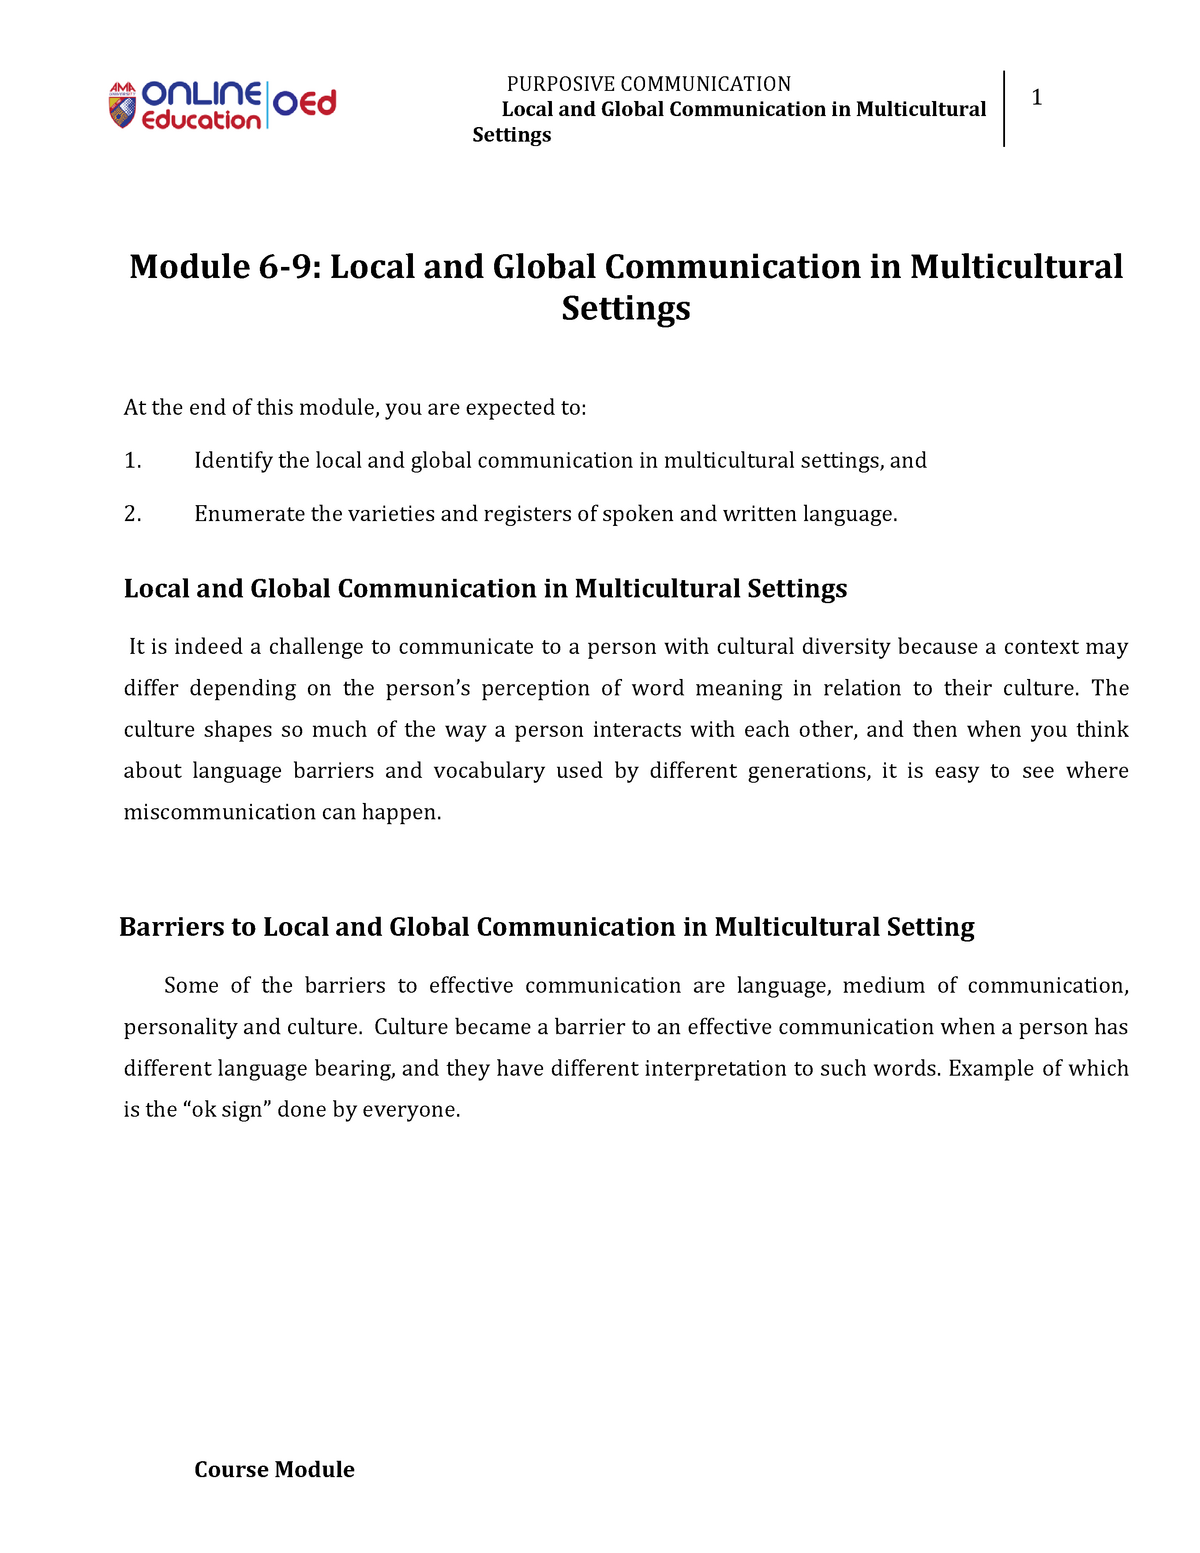 intercultural communication case study essay